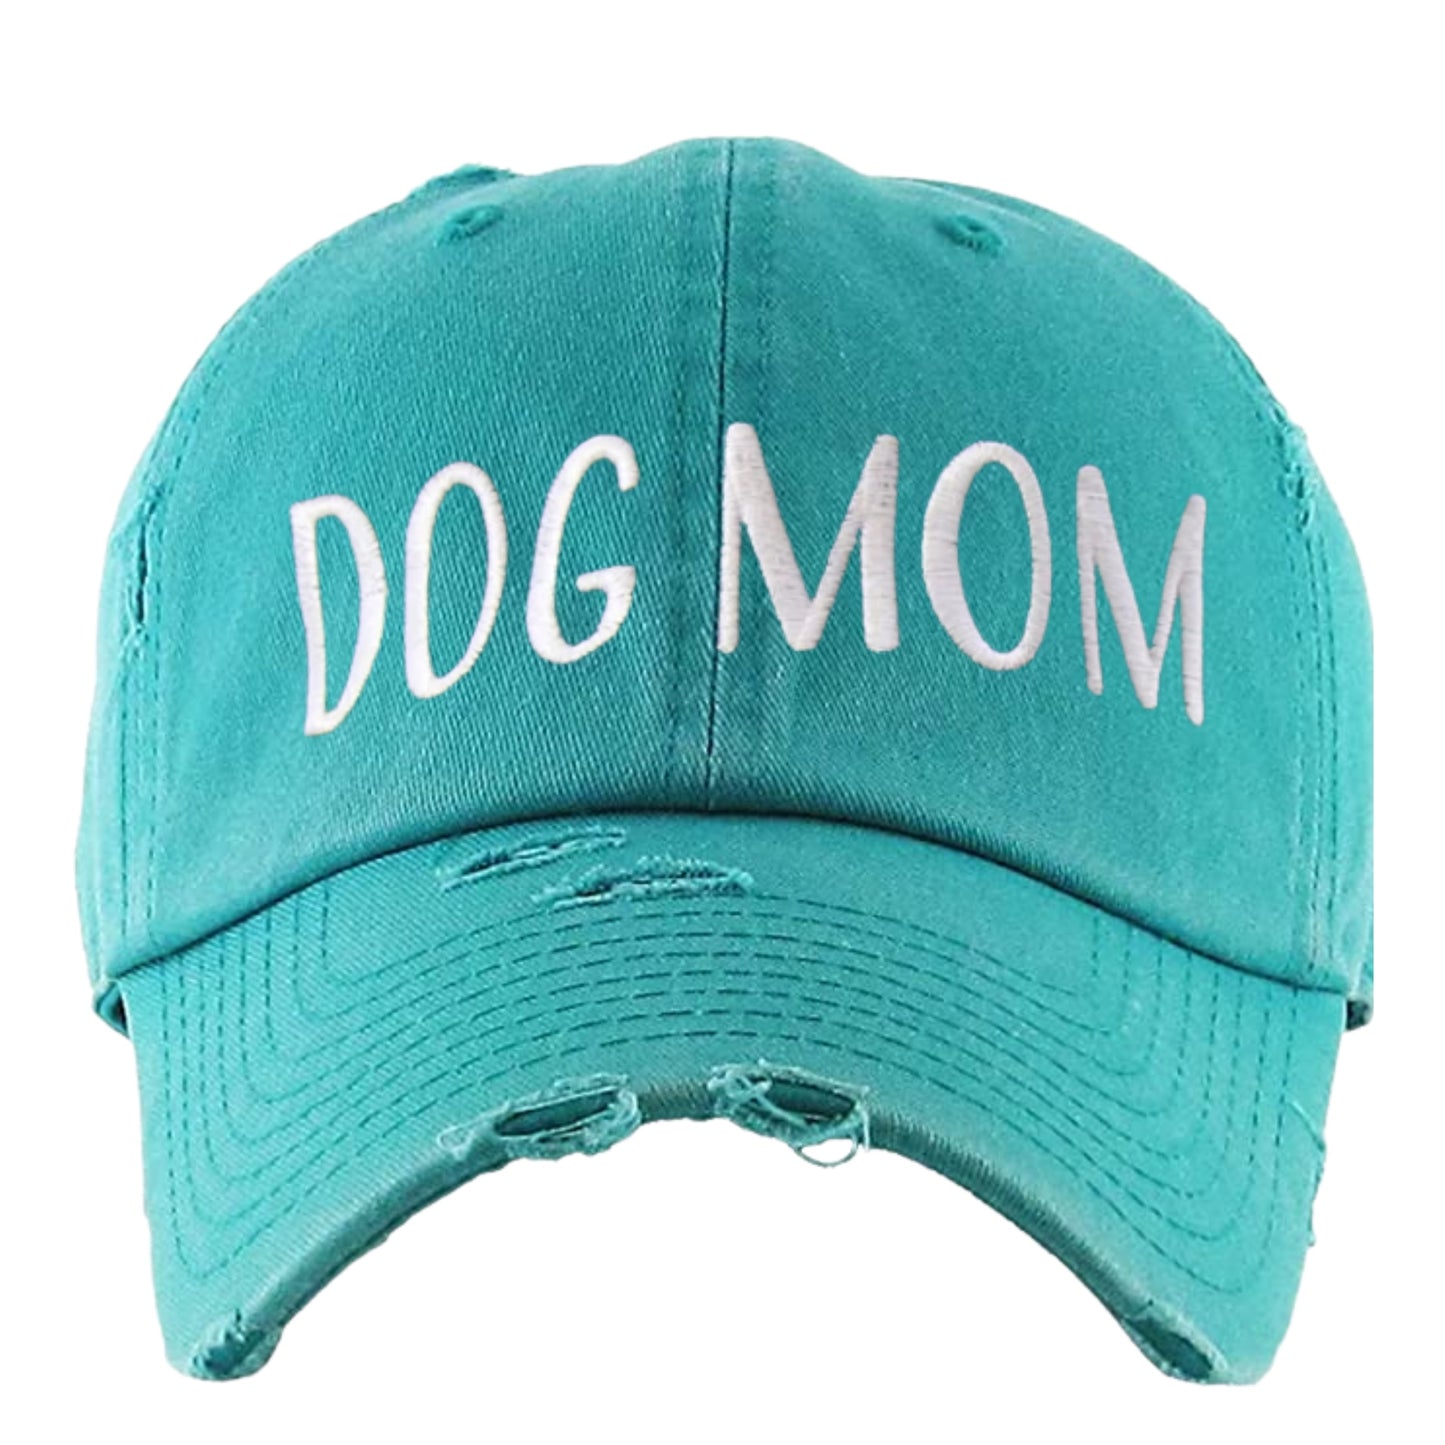 DOG MOM DISTRESSED TEAL HAT - BY DAPPER DEXTER